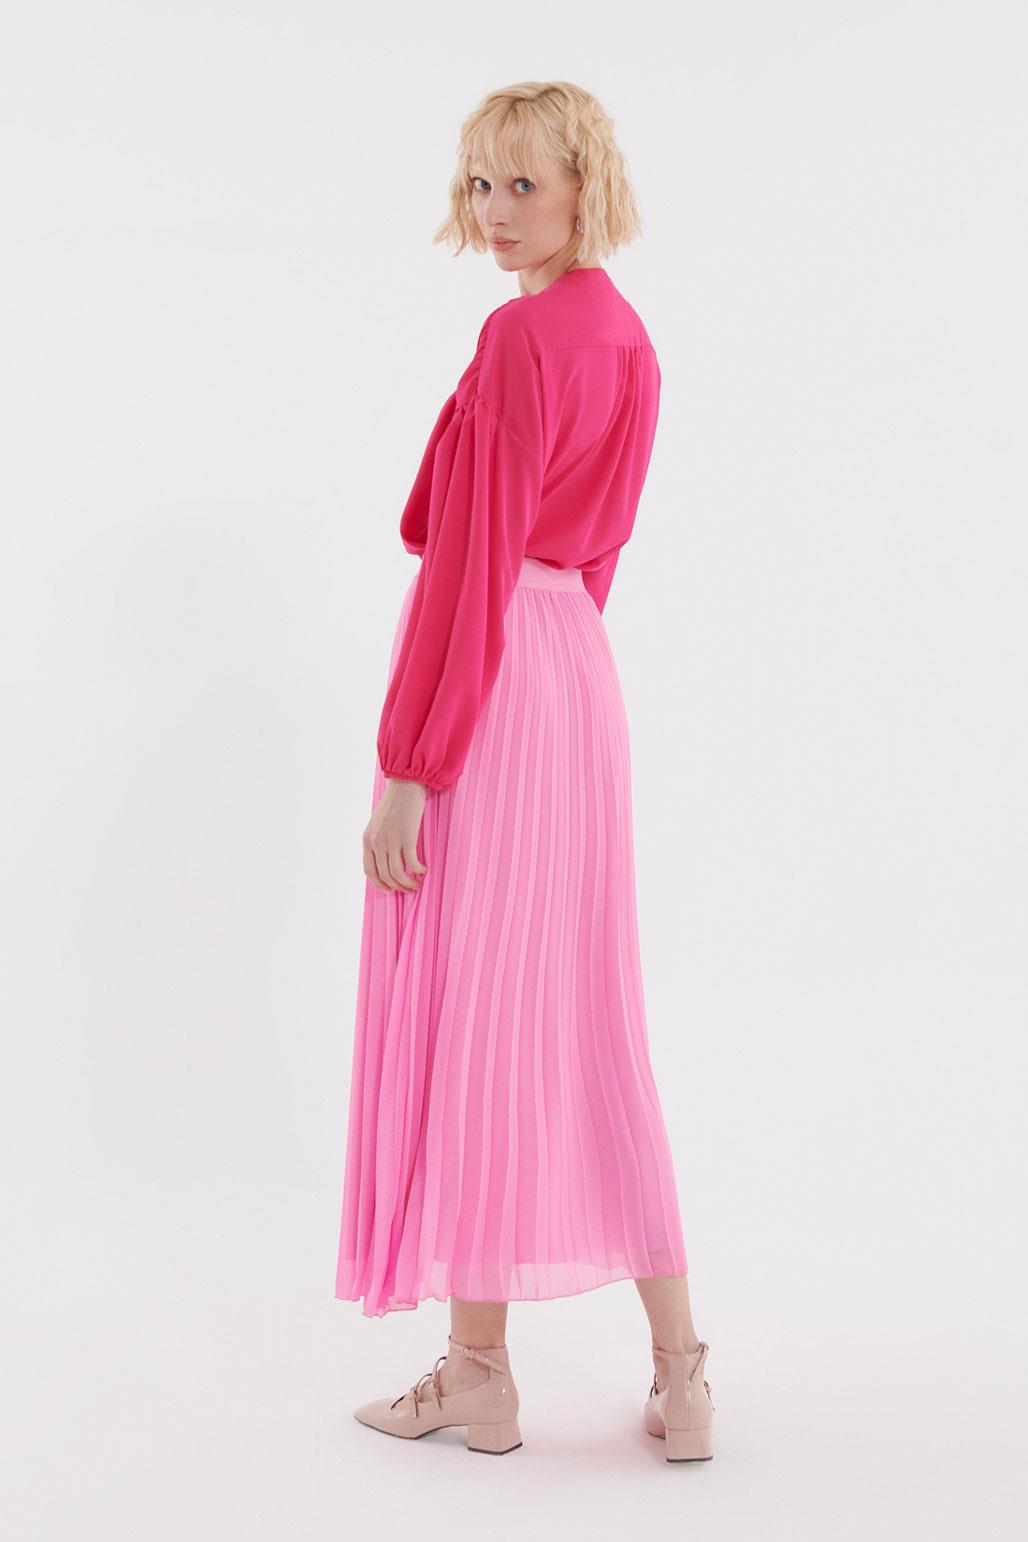 Pleated Grosgrain Skirt Pink